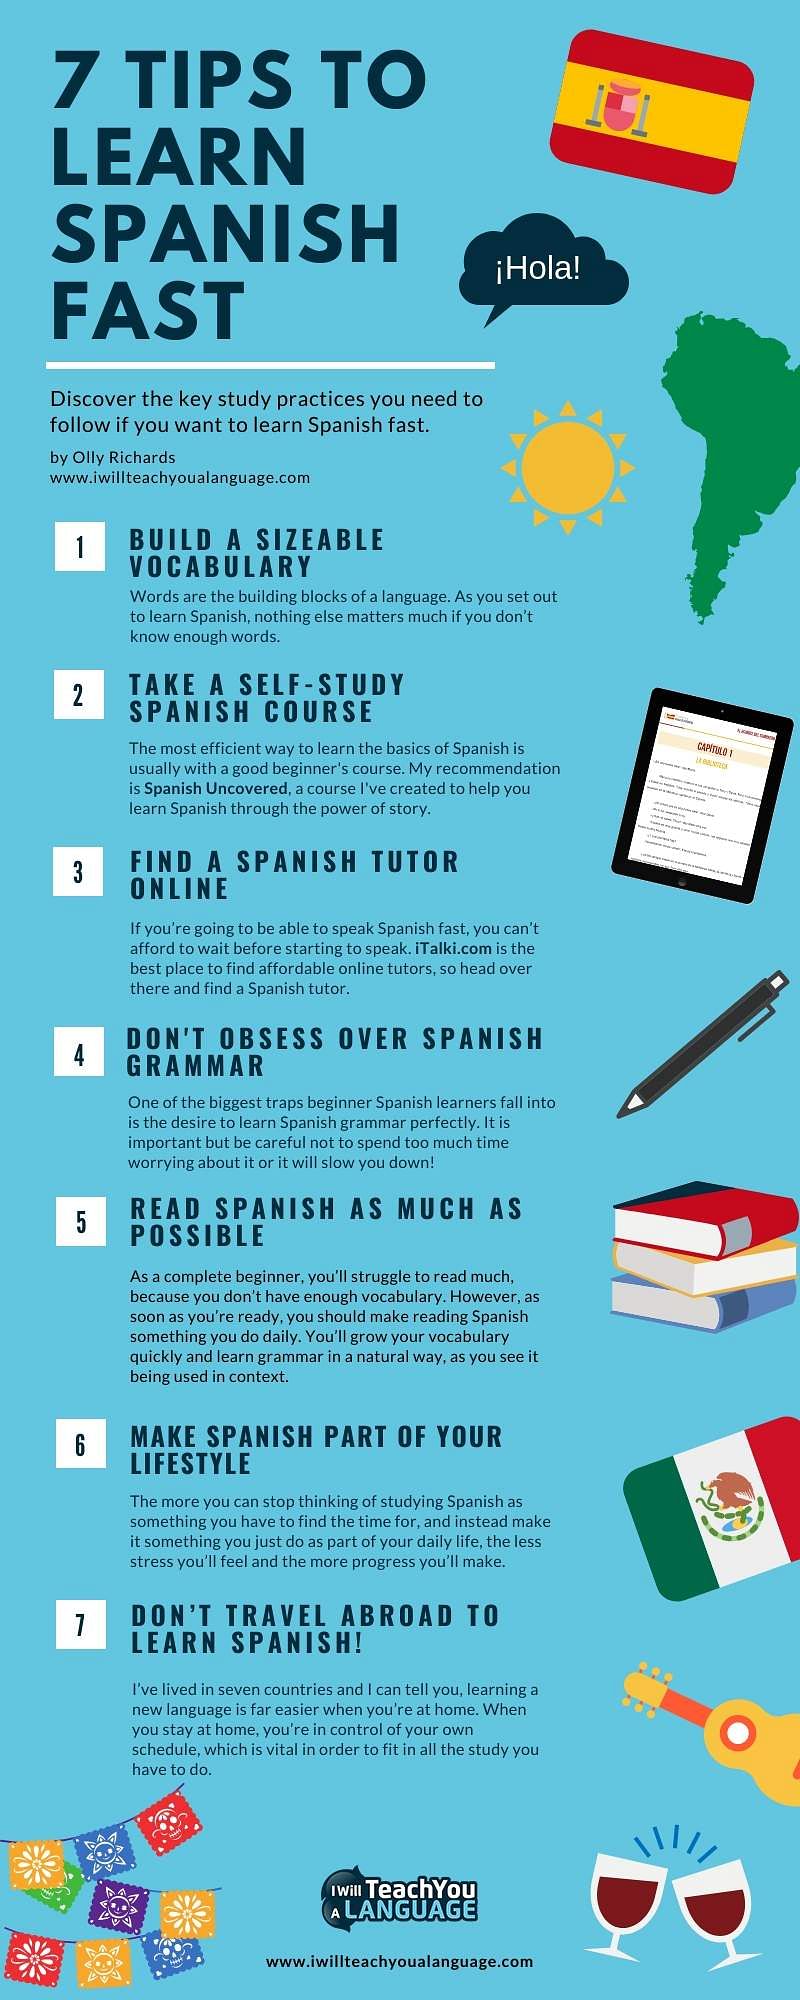 how-to-teach-someone-spanish-apps-like-memrise-duolingo-and-rosetta